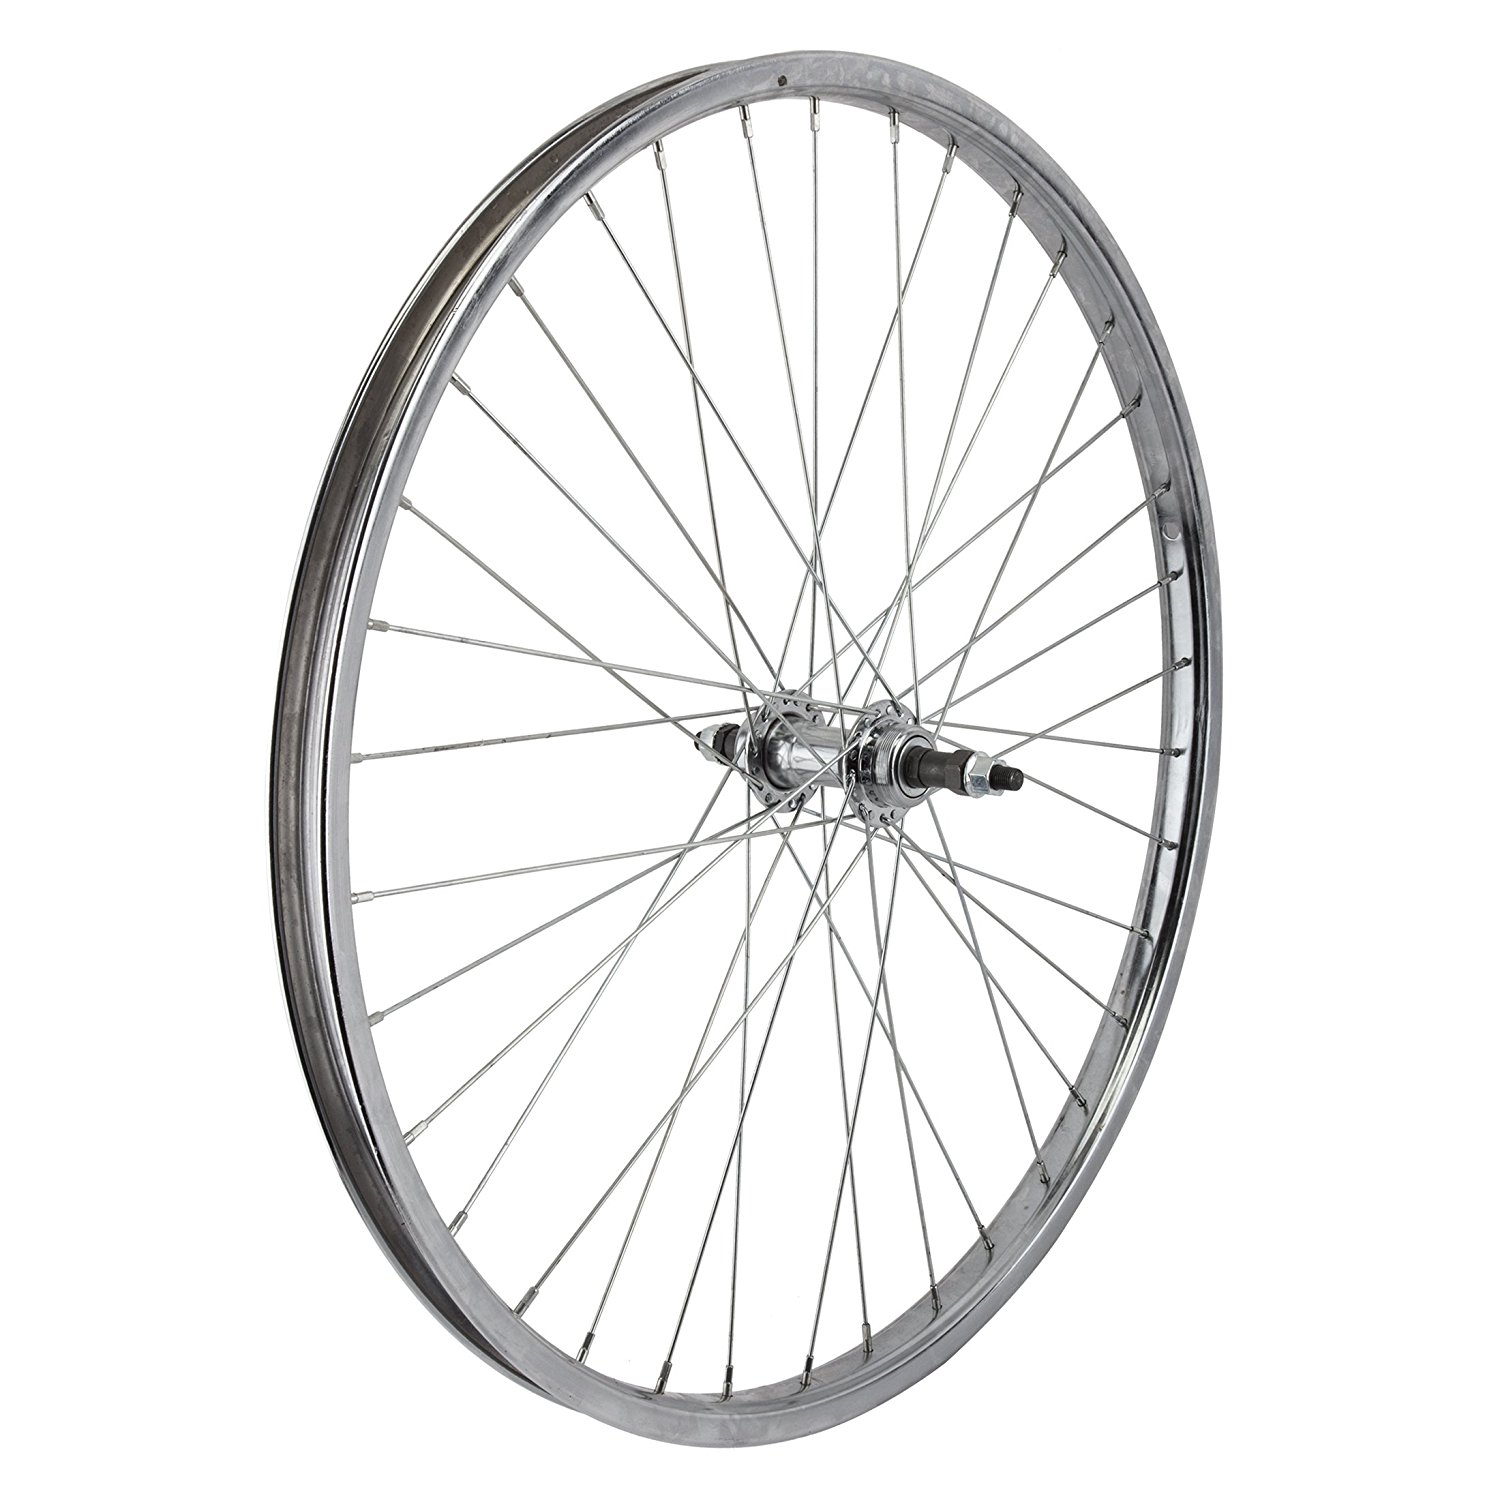 Amazon.com : Wheel Master Rear Bicycle Wheel 26 x 1.75/2.125 36H ...